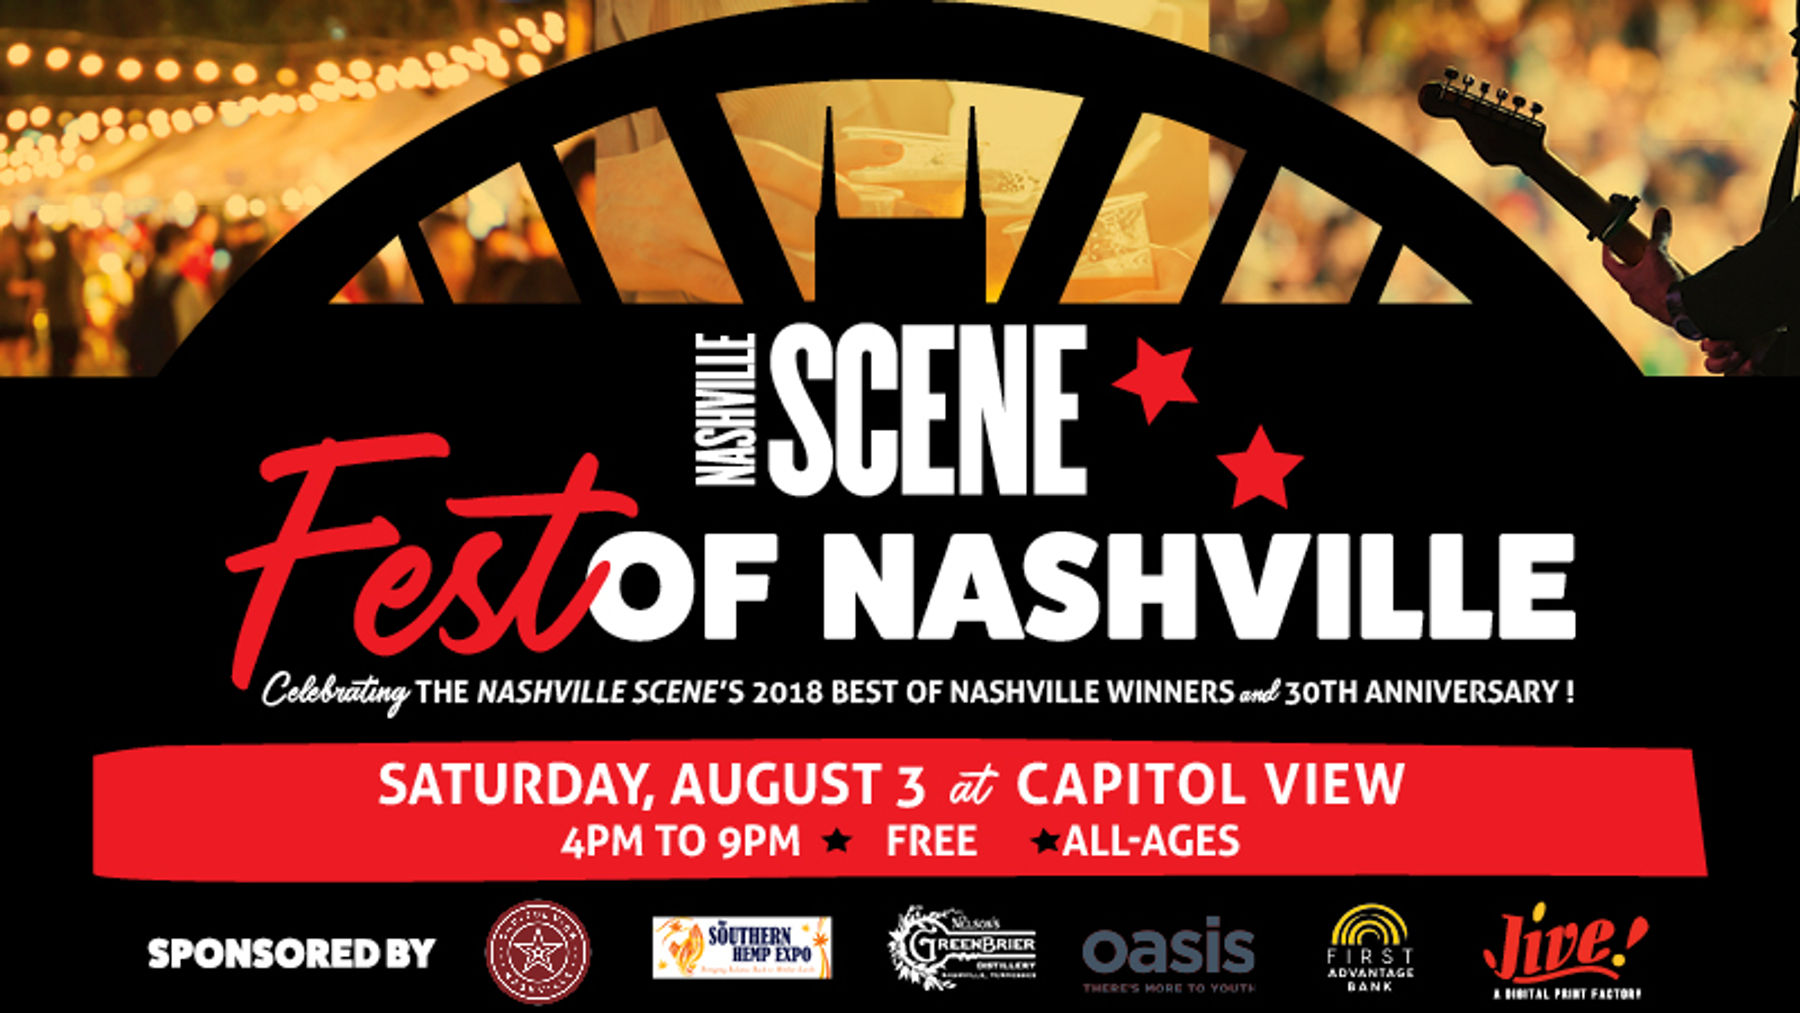 Fest of Nashville 2019 Downtown Nashville